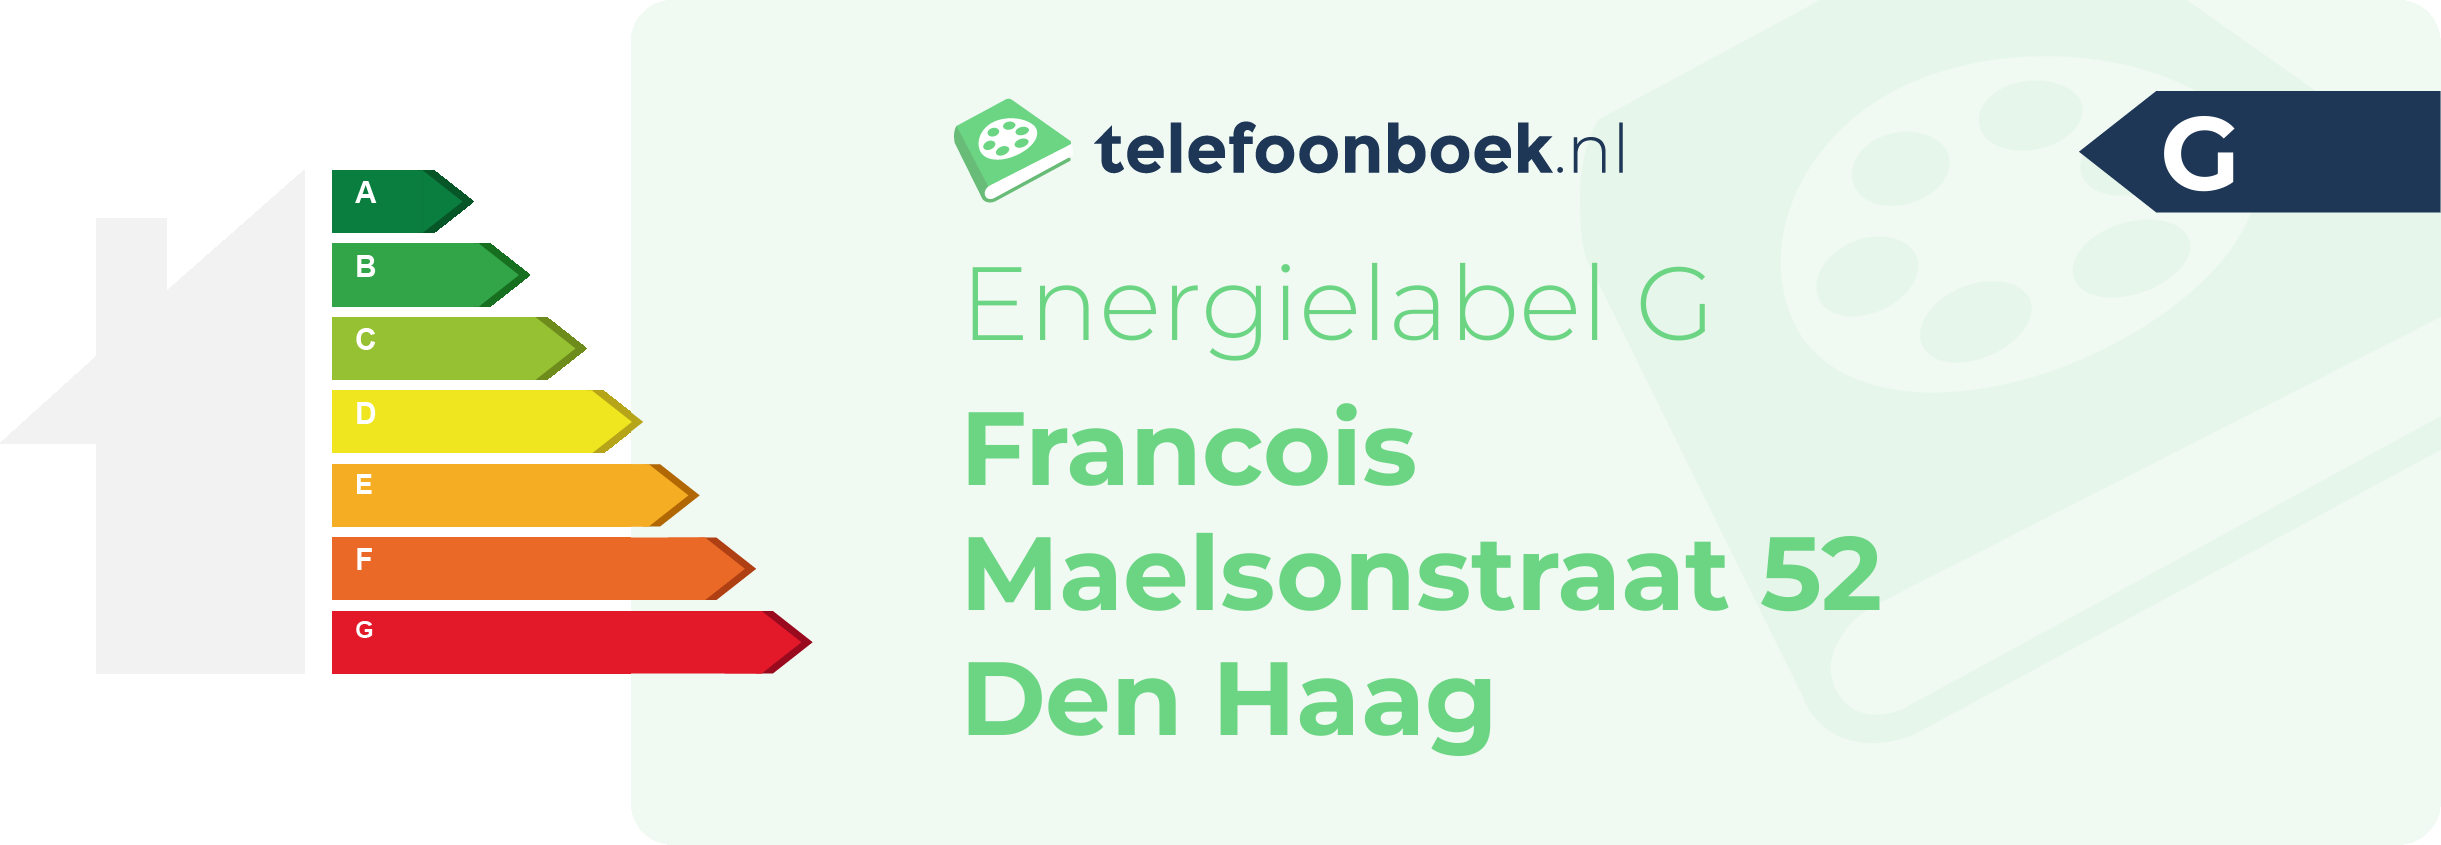 Energielabel Francois Maelsonstraat 52 Den Haag